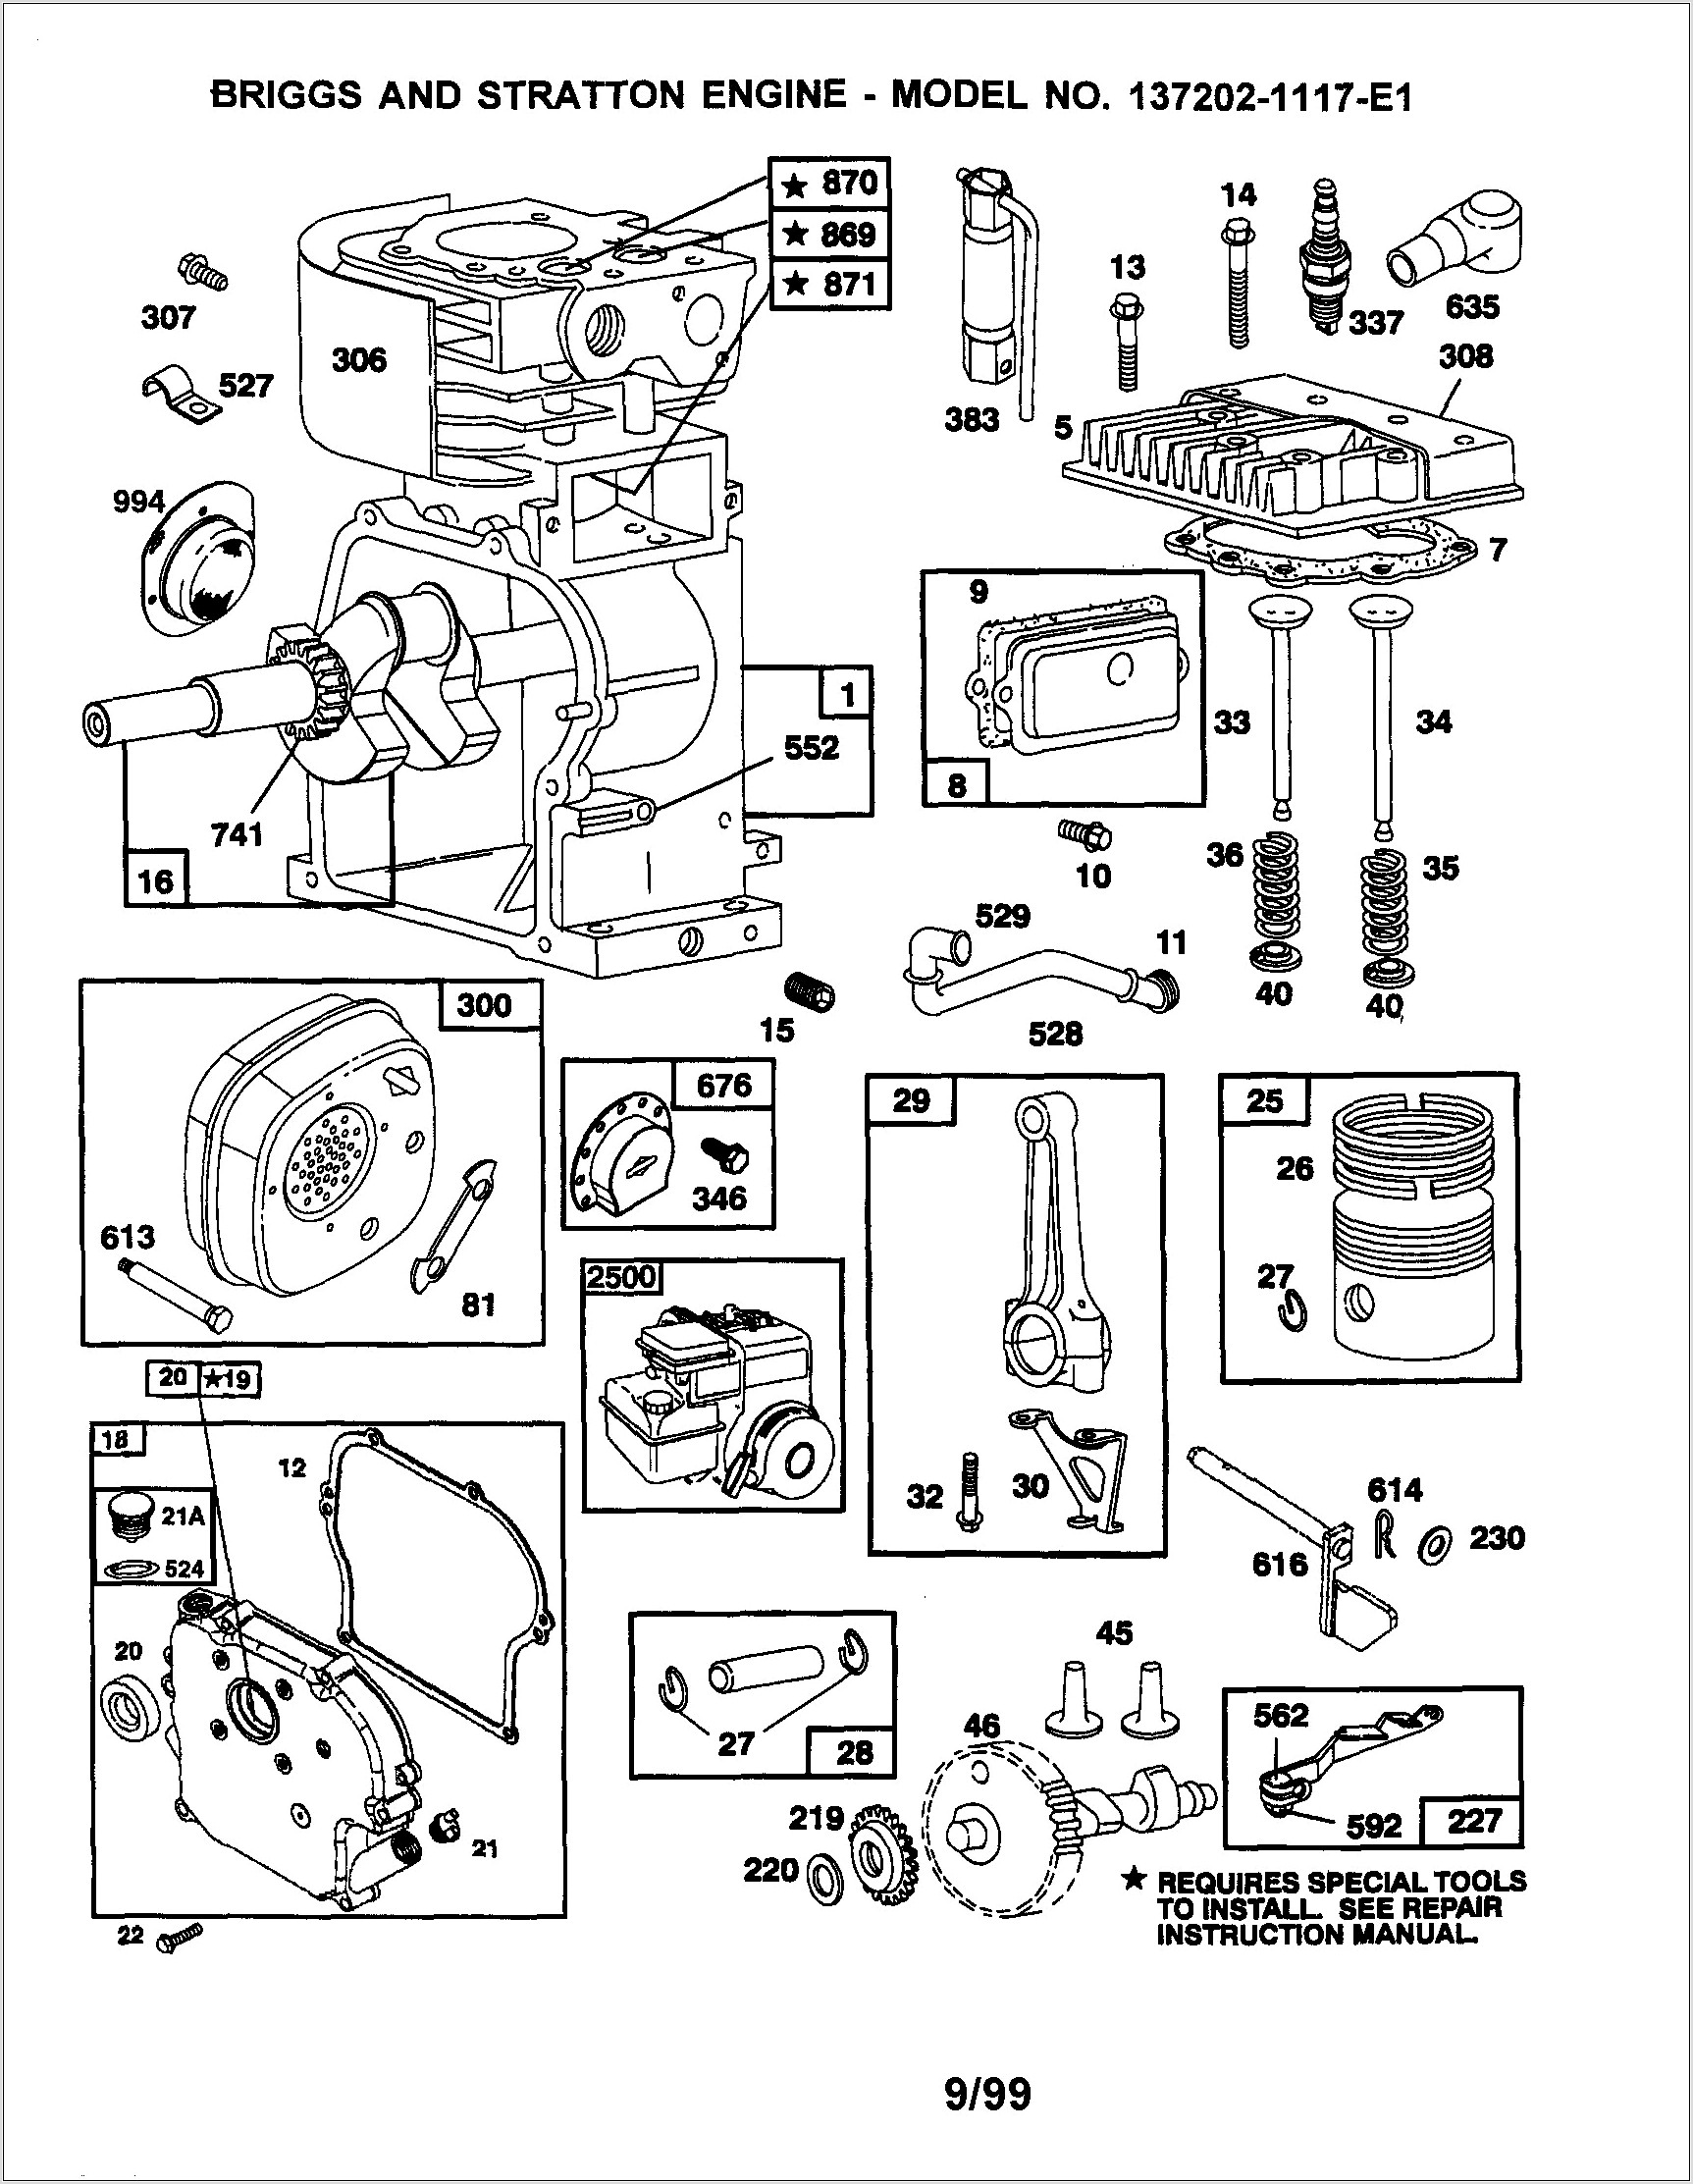 Briggs And Stratton Lawn Mower Engine Diagram